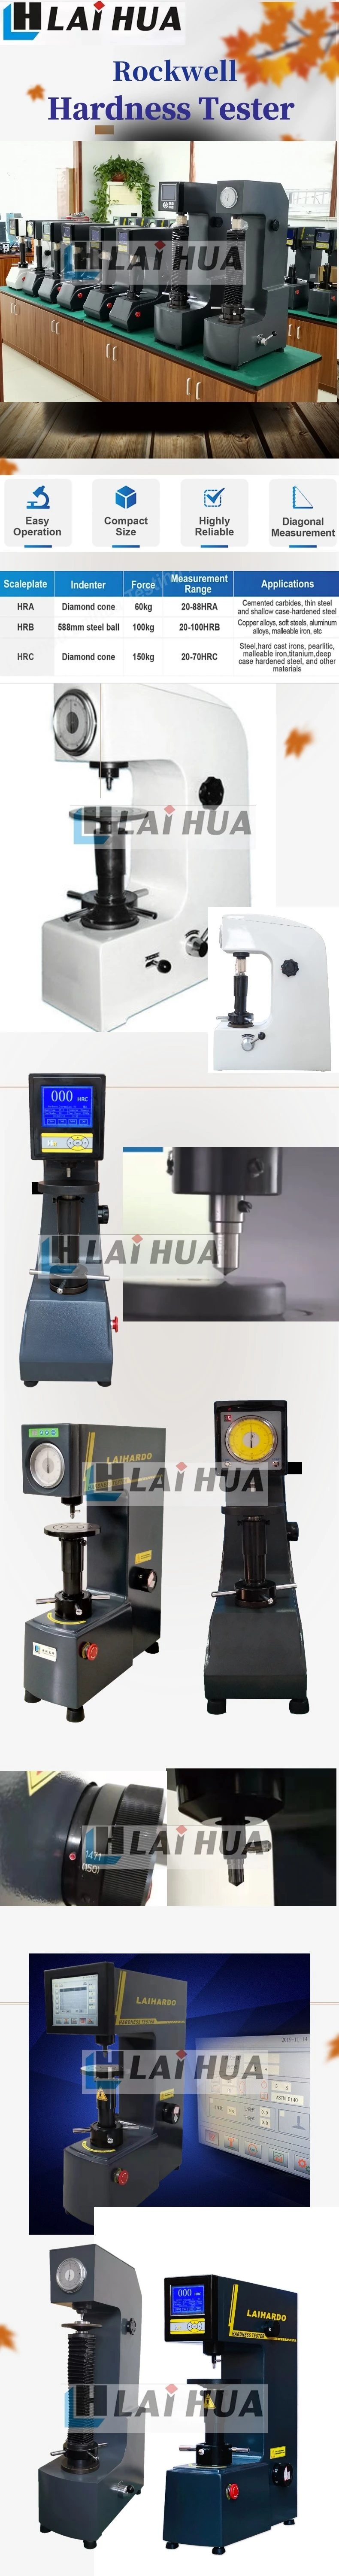 Metal Hardness Tester, Steel Rockwell Hardness Tester HRC, Screen Digital Display Rockwell Hardness Tester Price